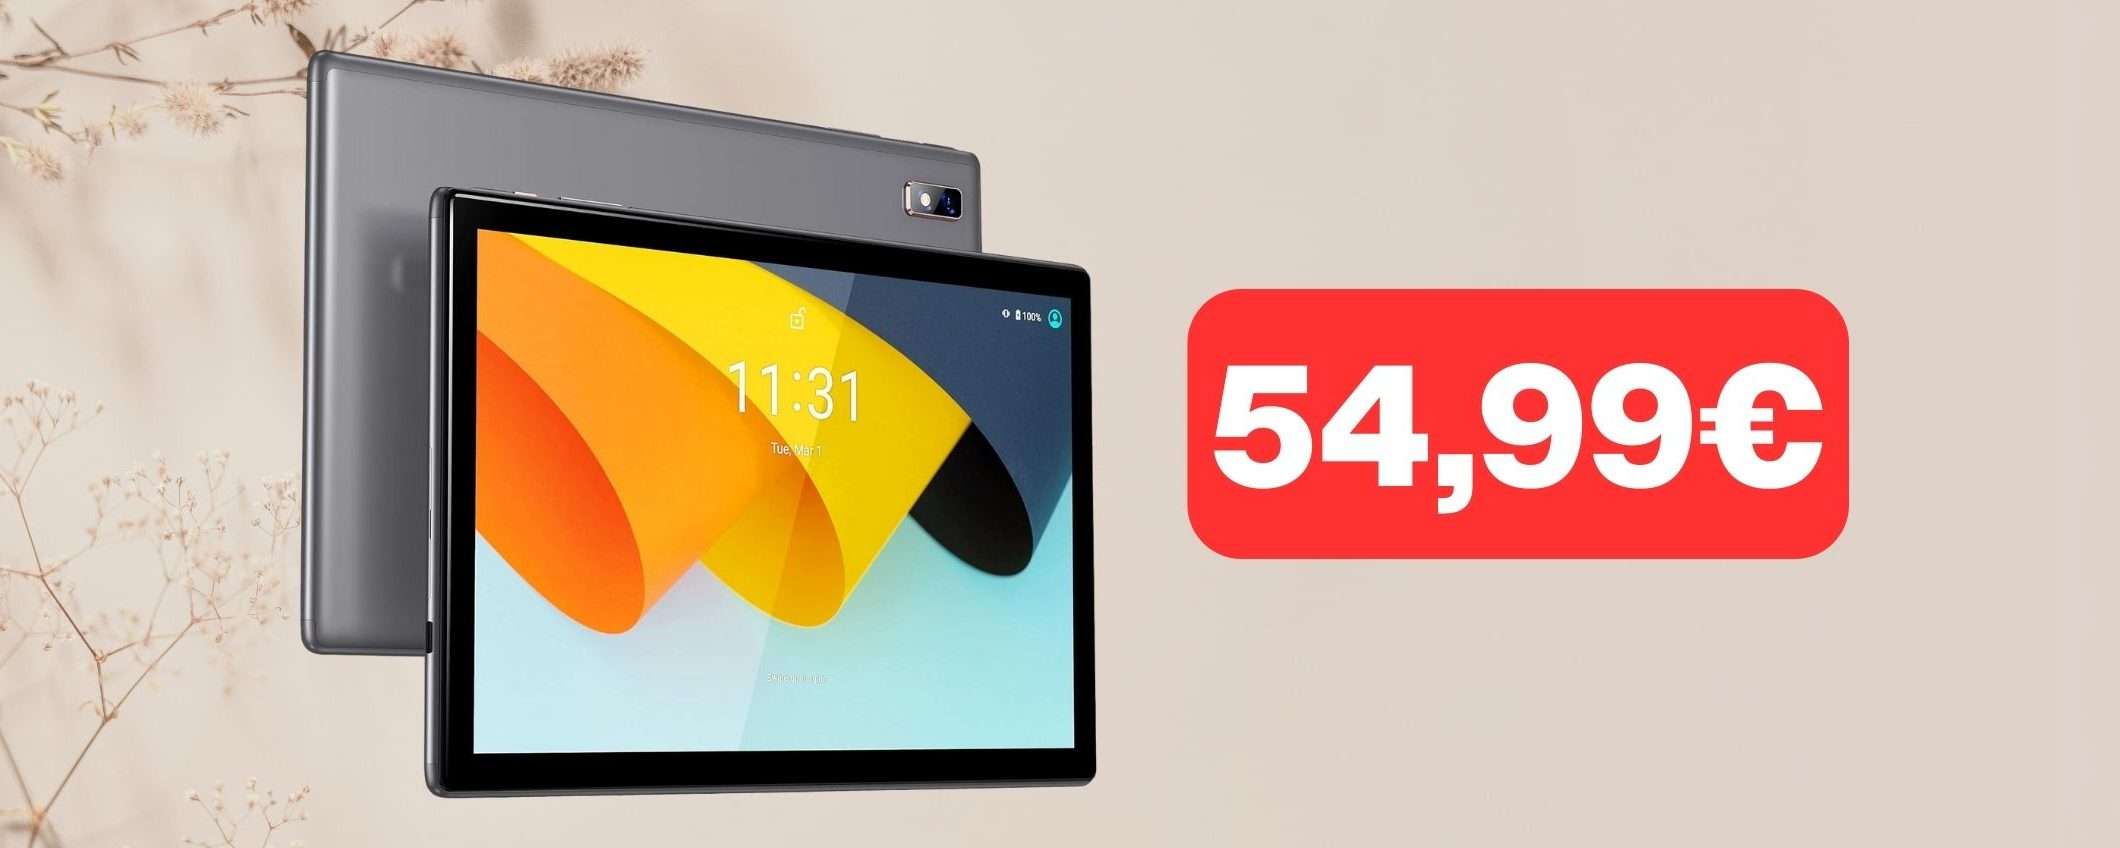 Tablet Android da 10.1 pollici a 54,99 euro: INCREDIBILE su Amazon